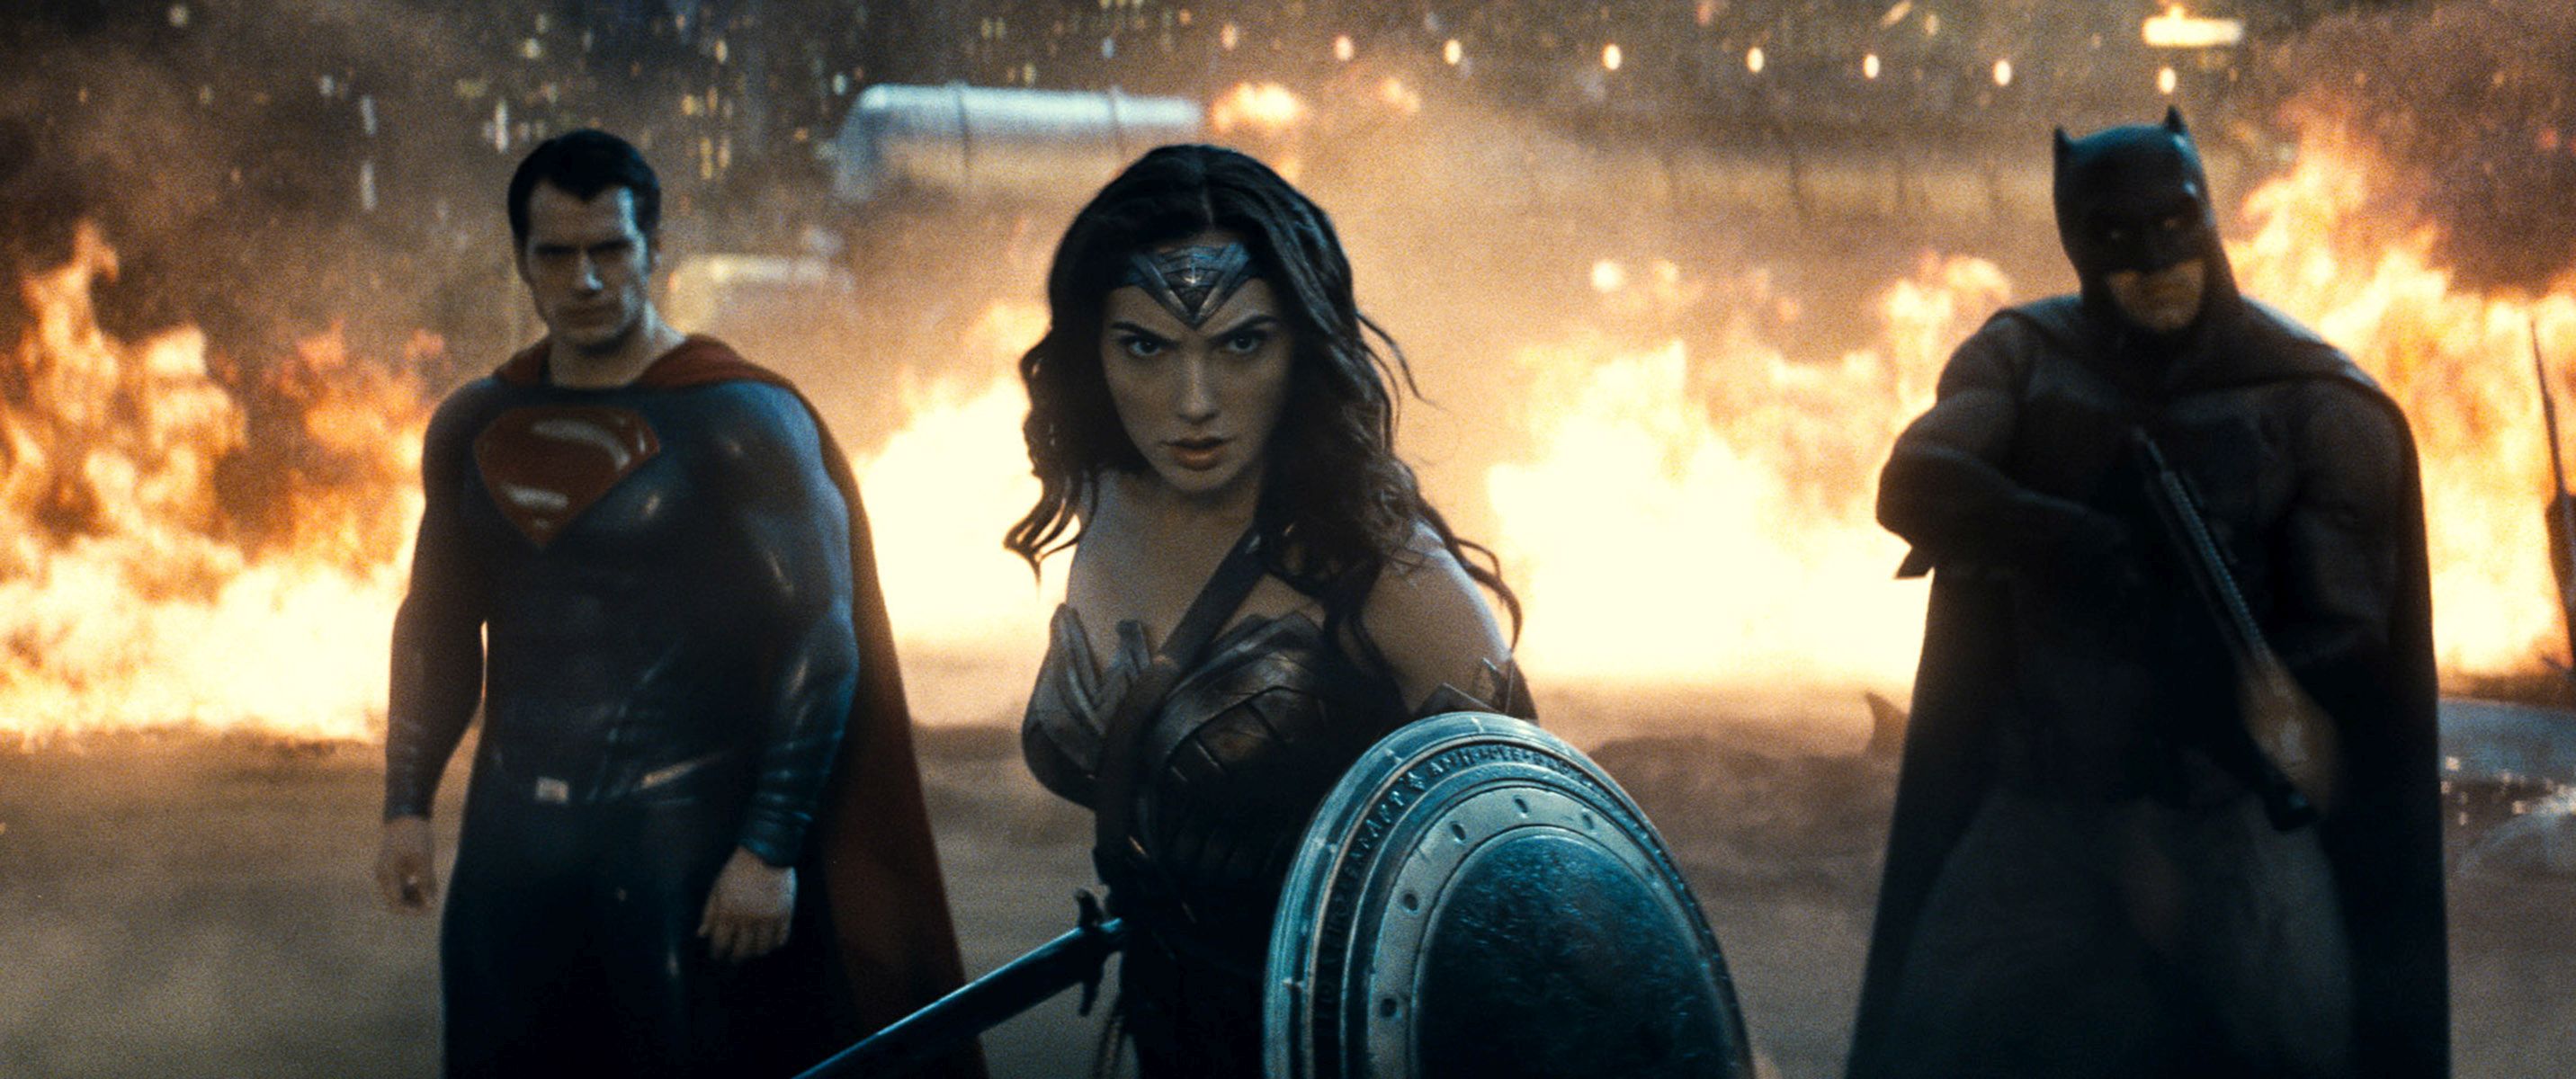 bvshresp39 Watch: Batman Vs. Superman Wonder Woman #1 Movie Spot